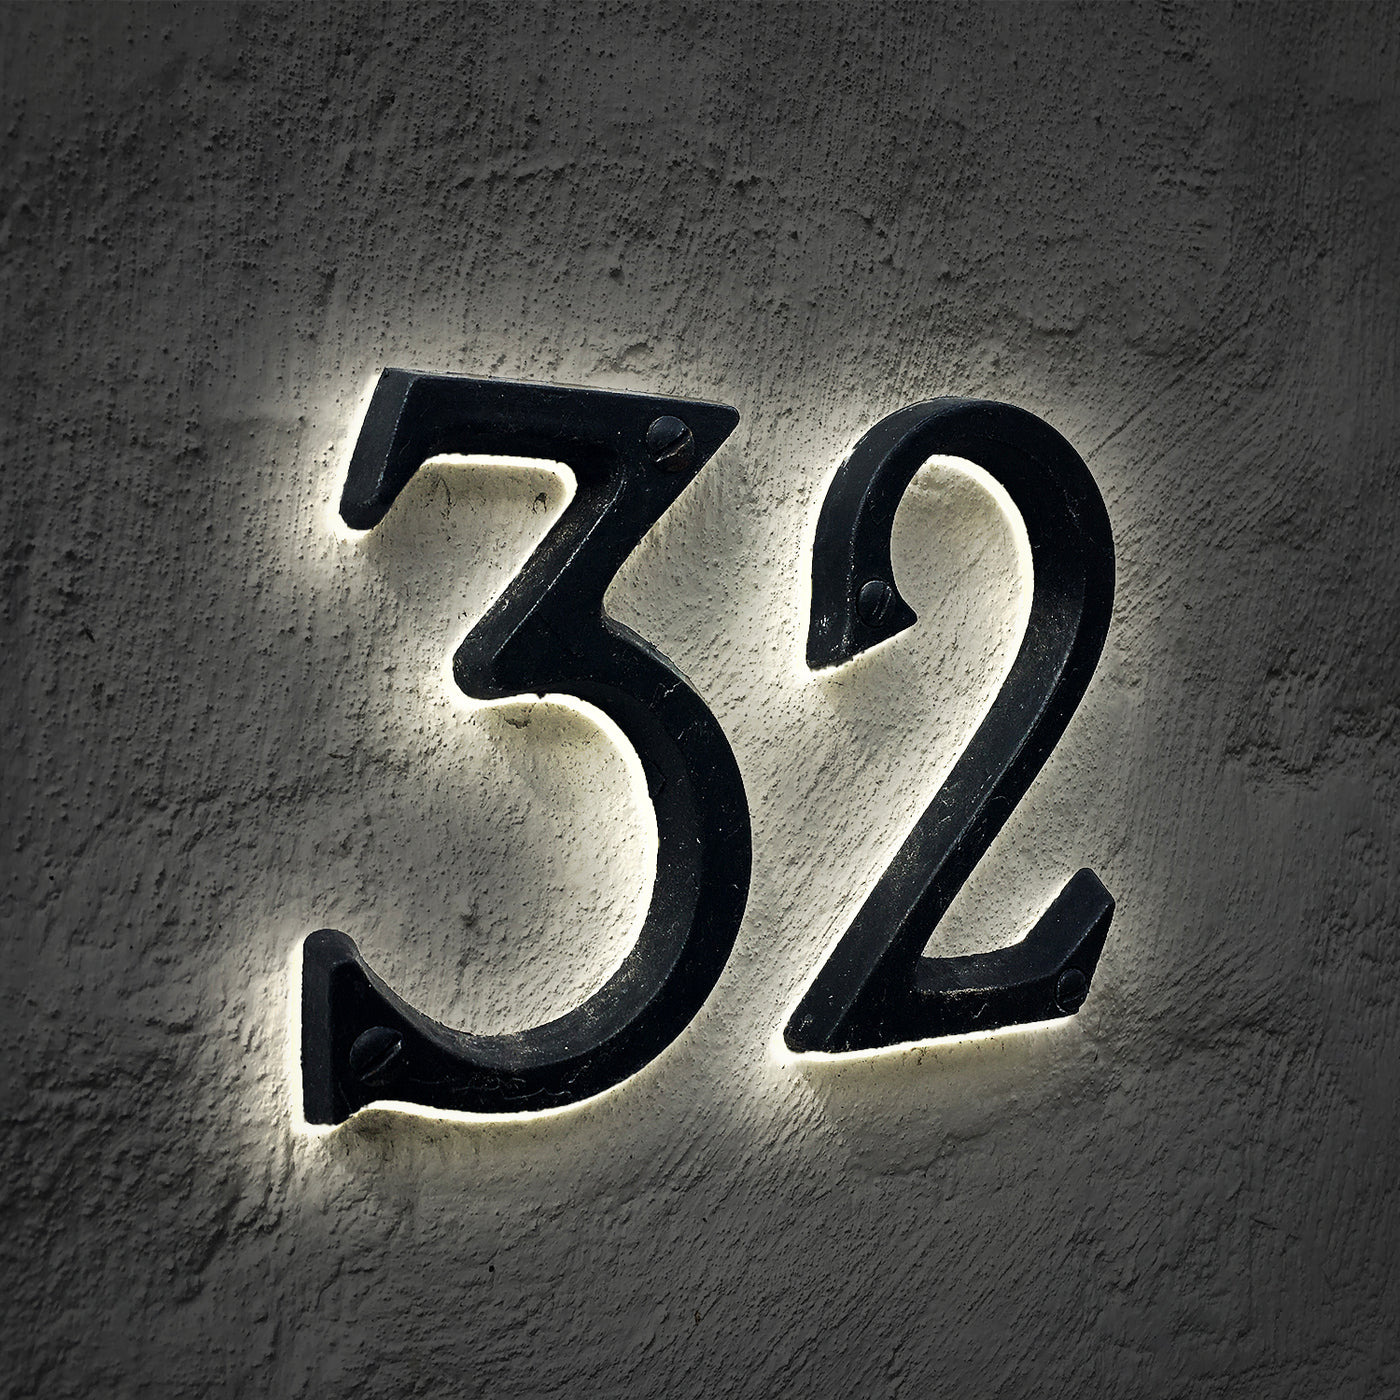 Backlit Led Address Numbers Number Plate Of House Sign